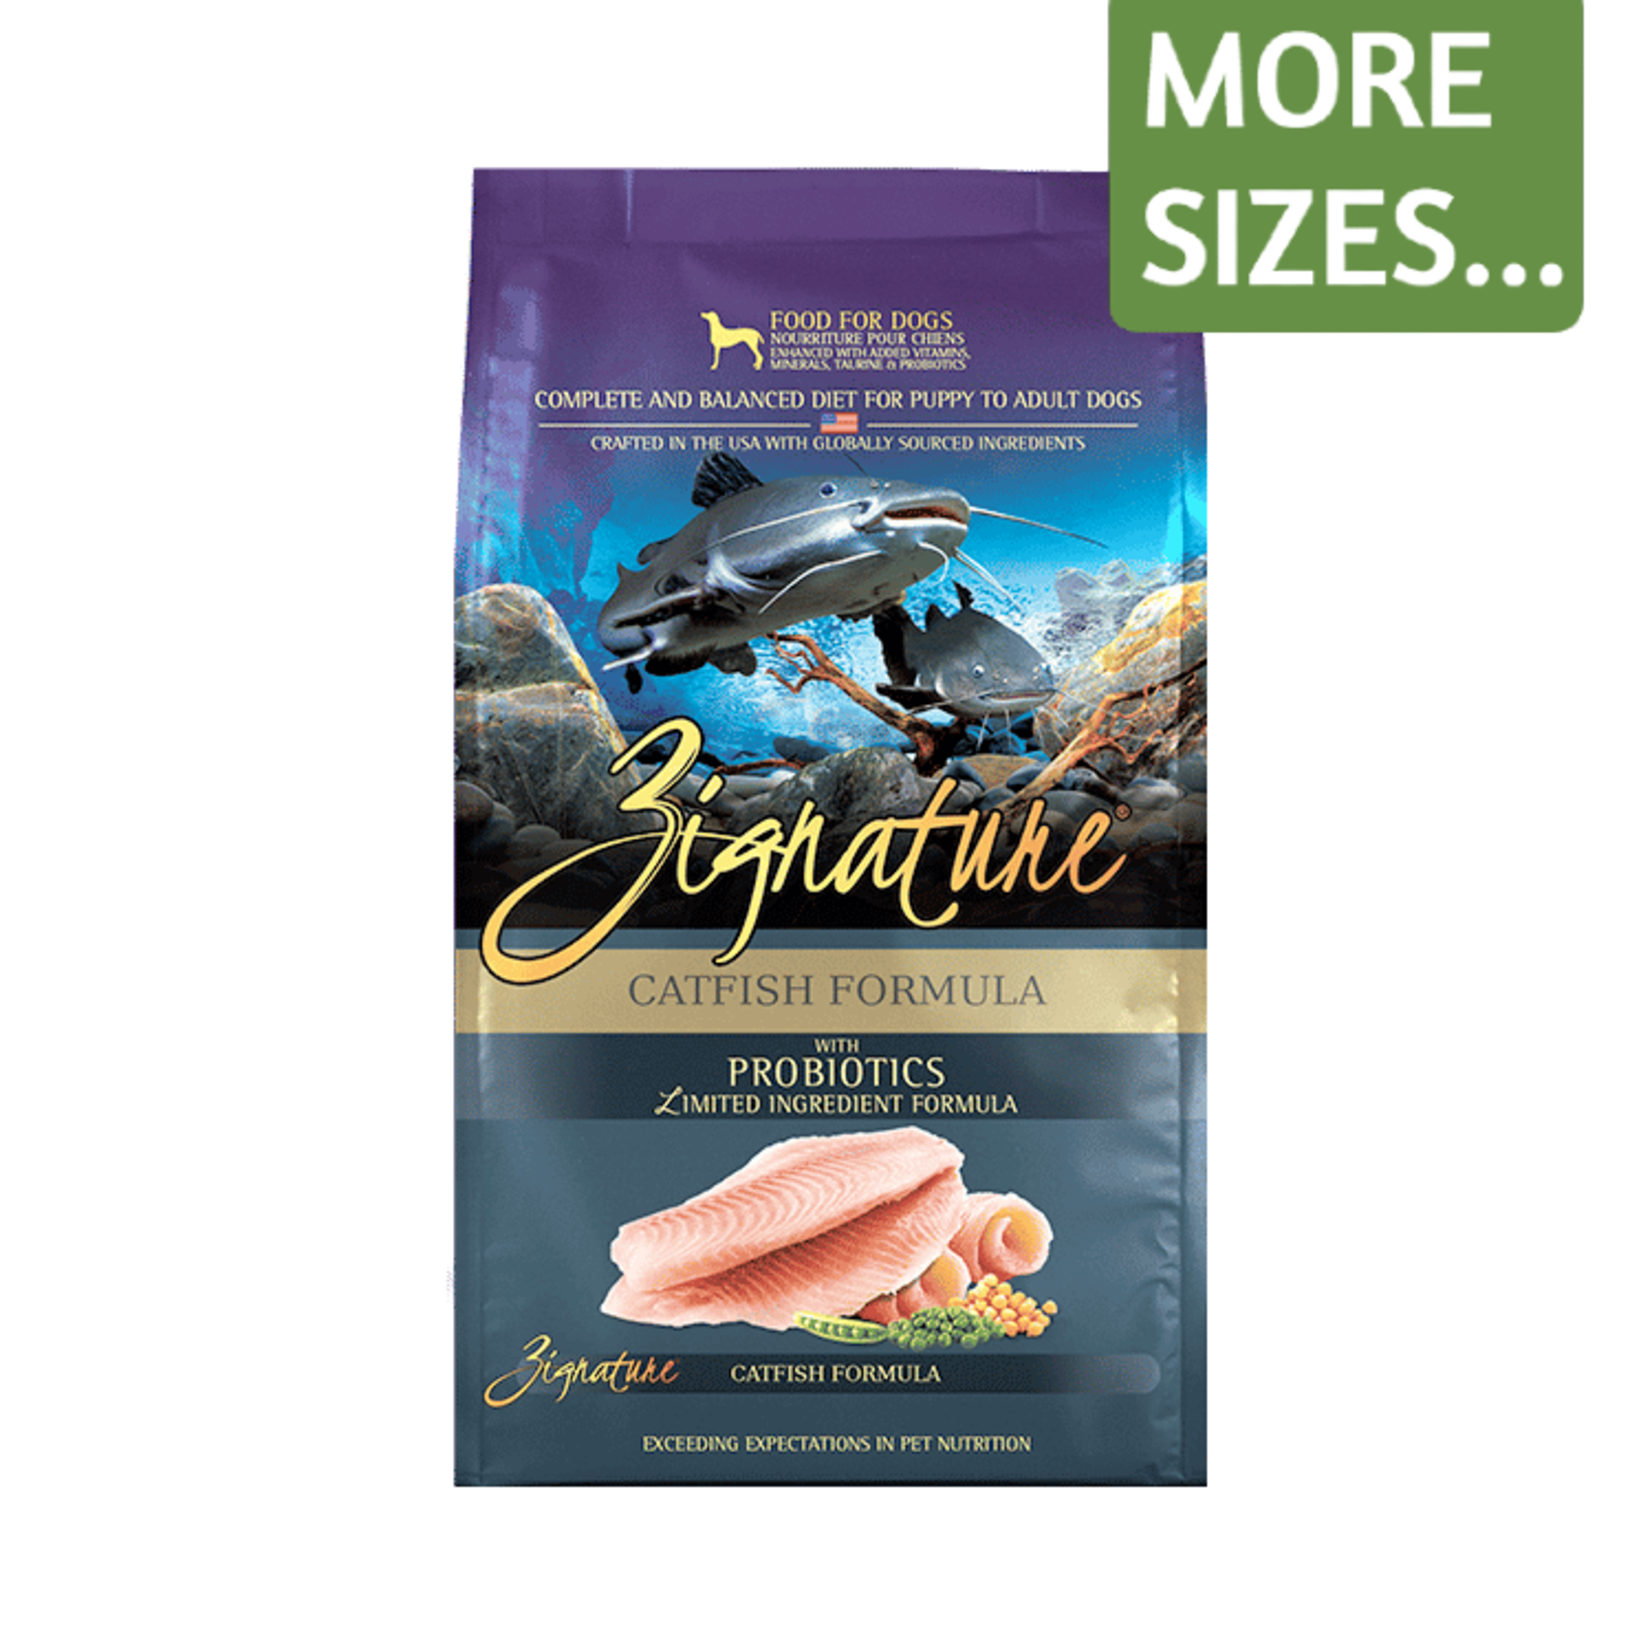 Zignature Zignature Dry Dog Food Limited Ingredient Formula Catfish Formula Grain Free